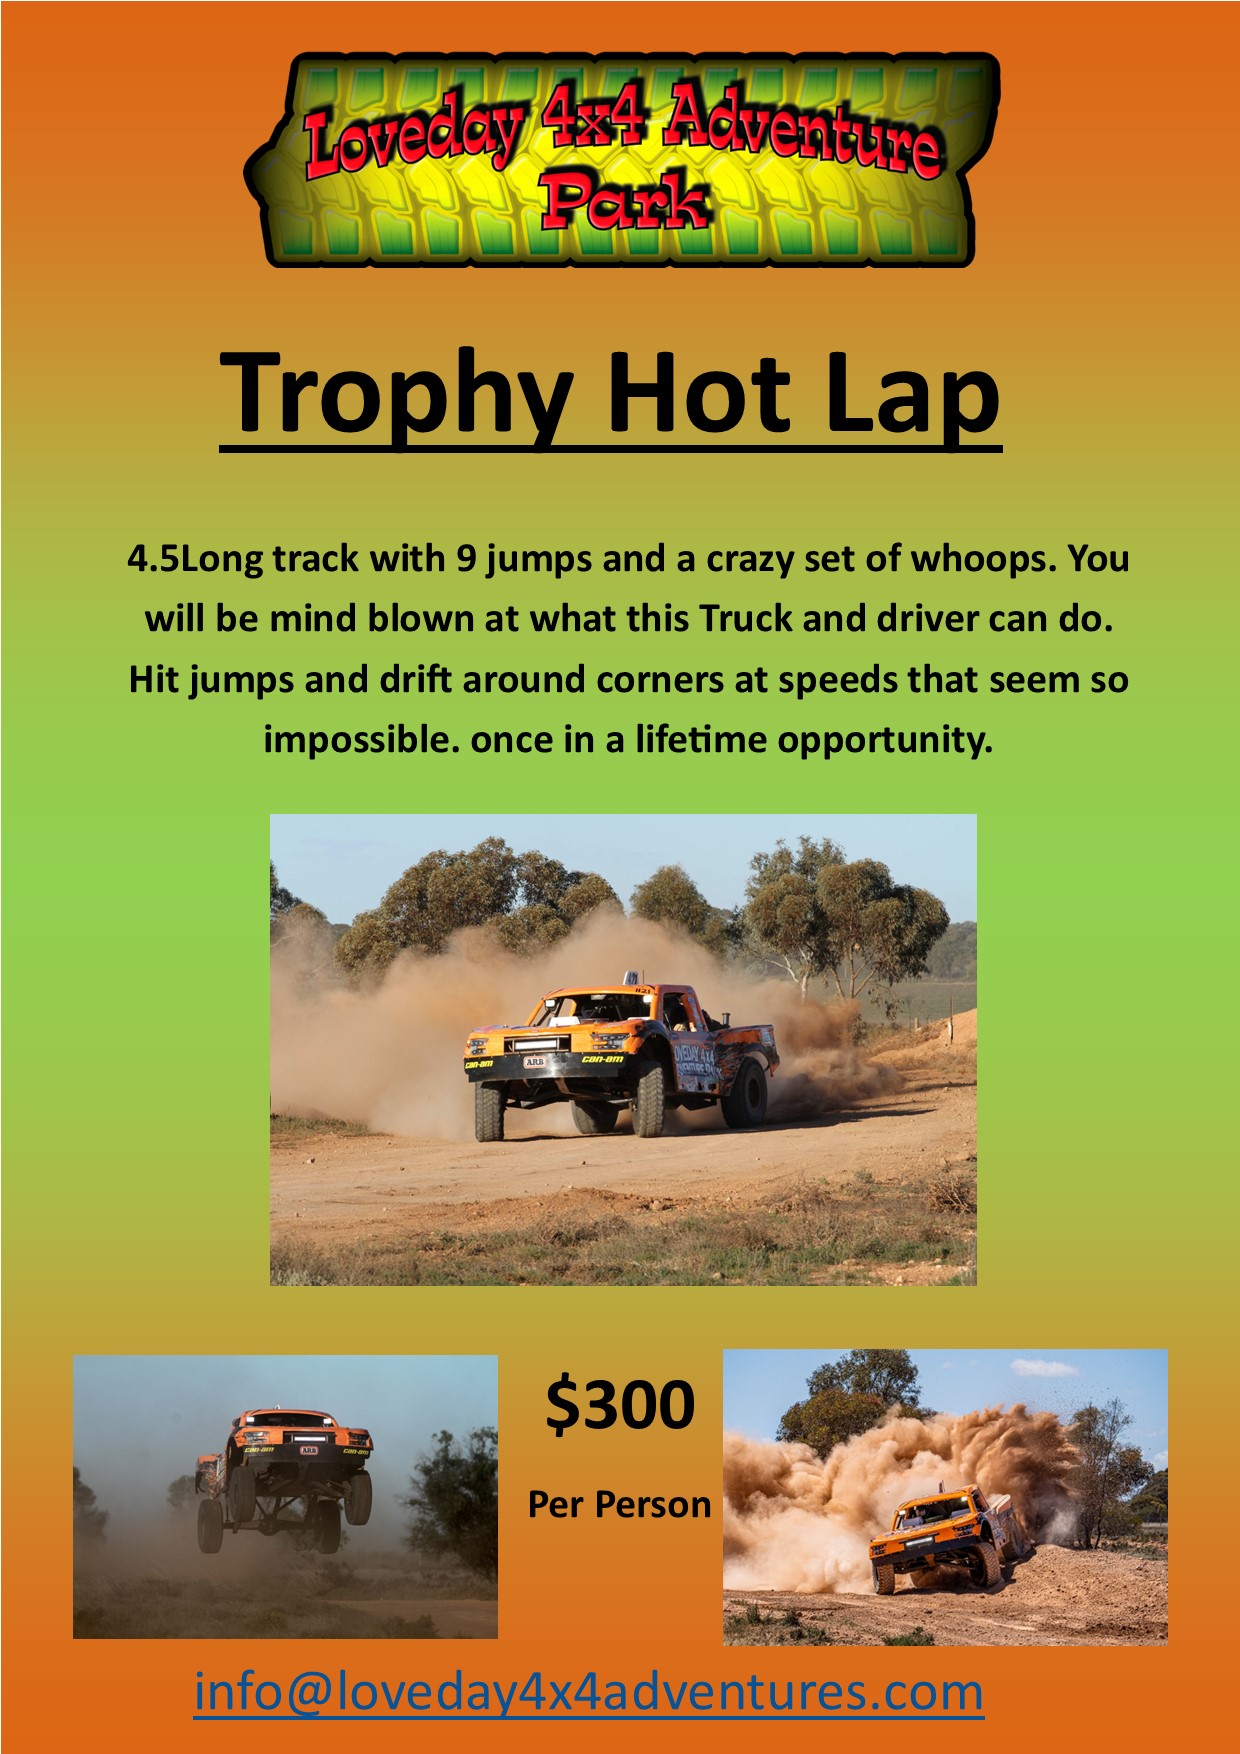 Trophy Truck Rides Australia